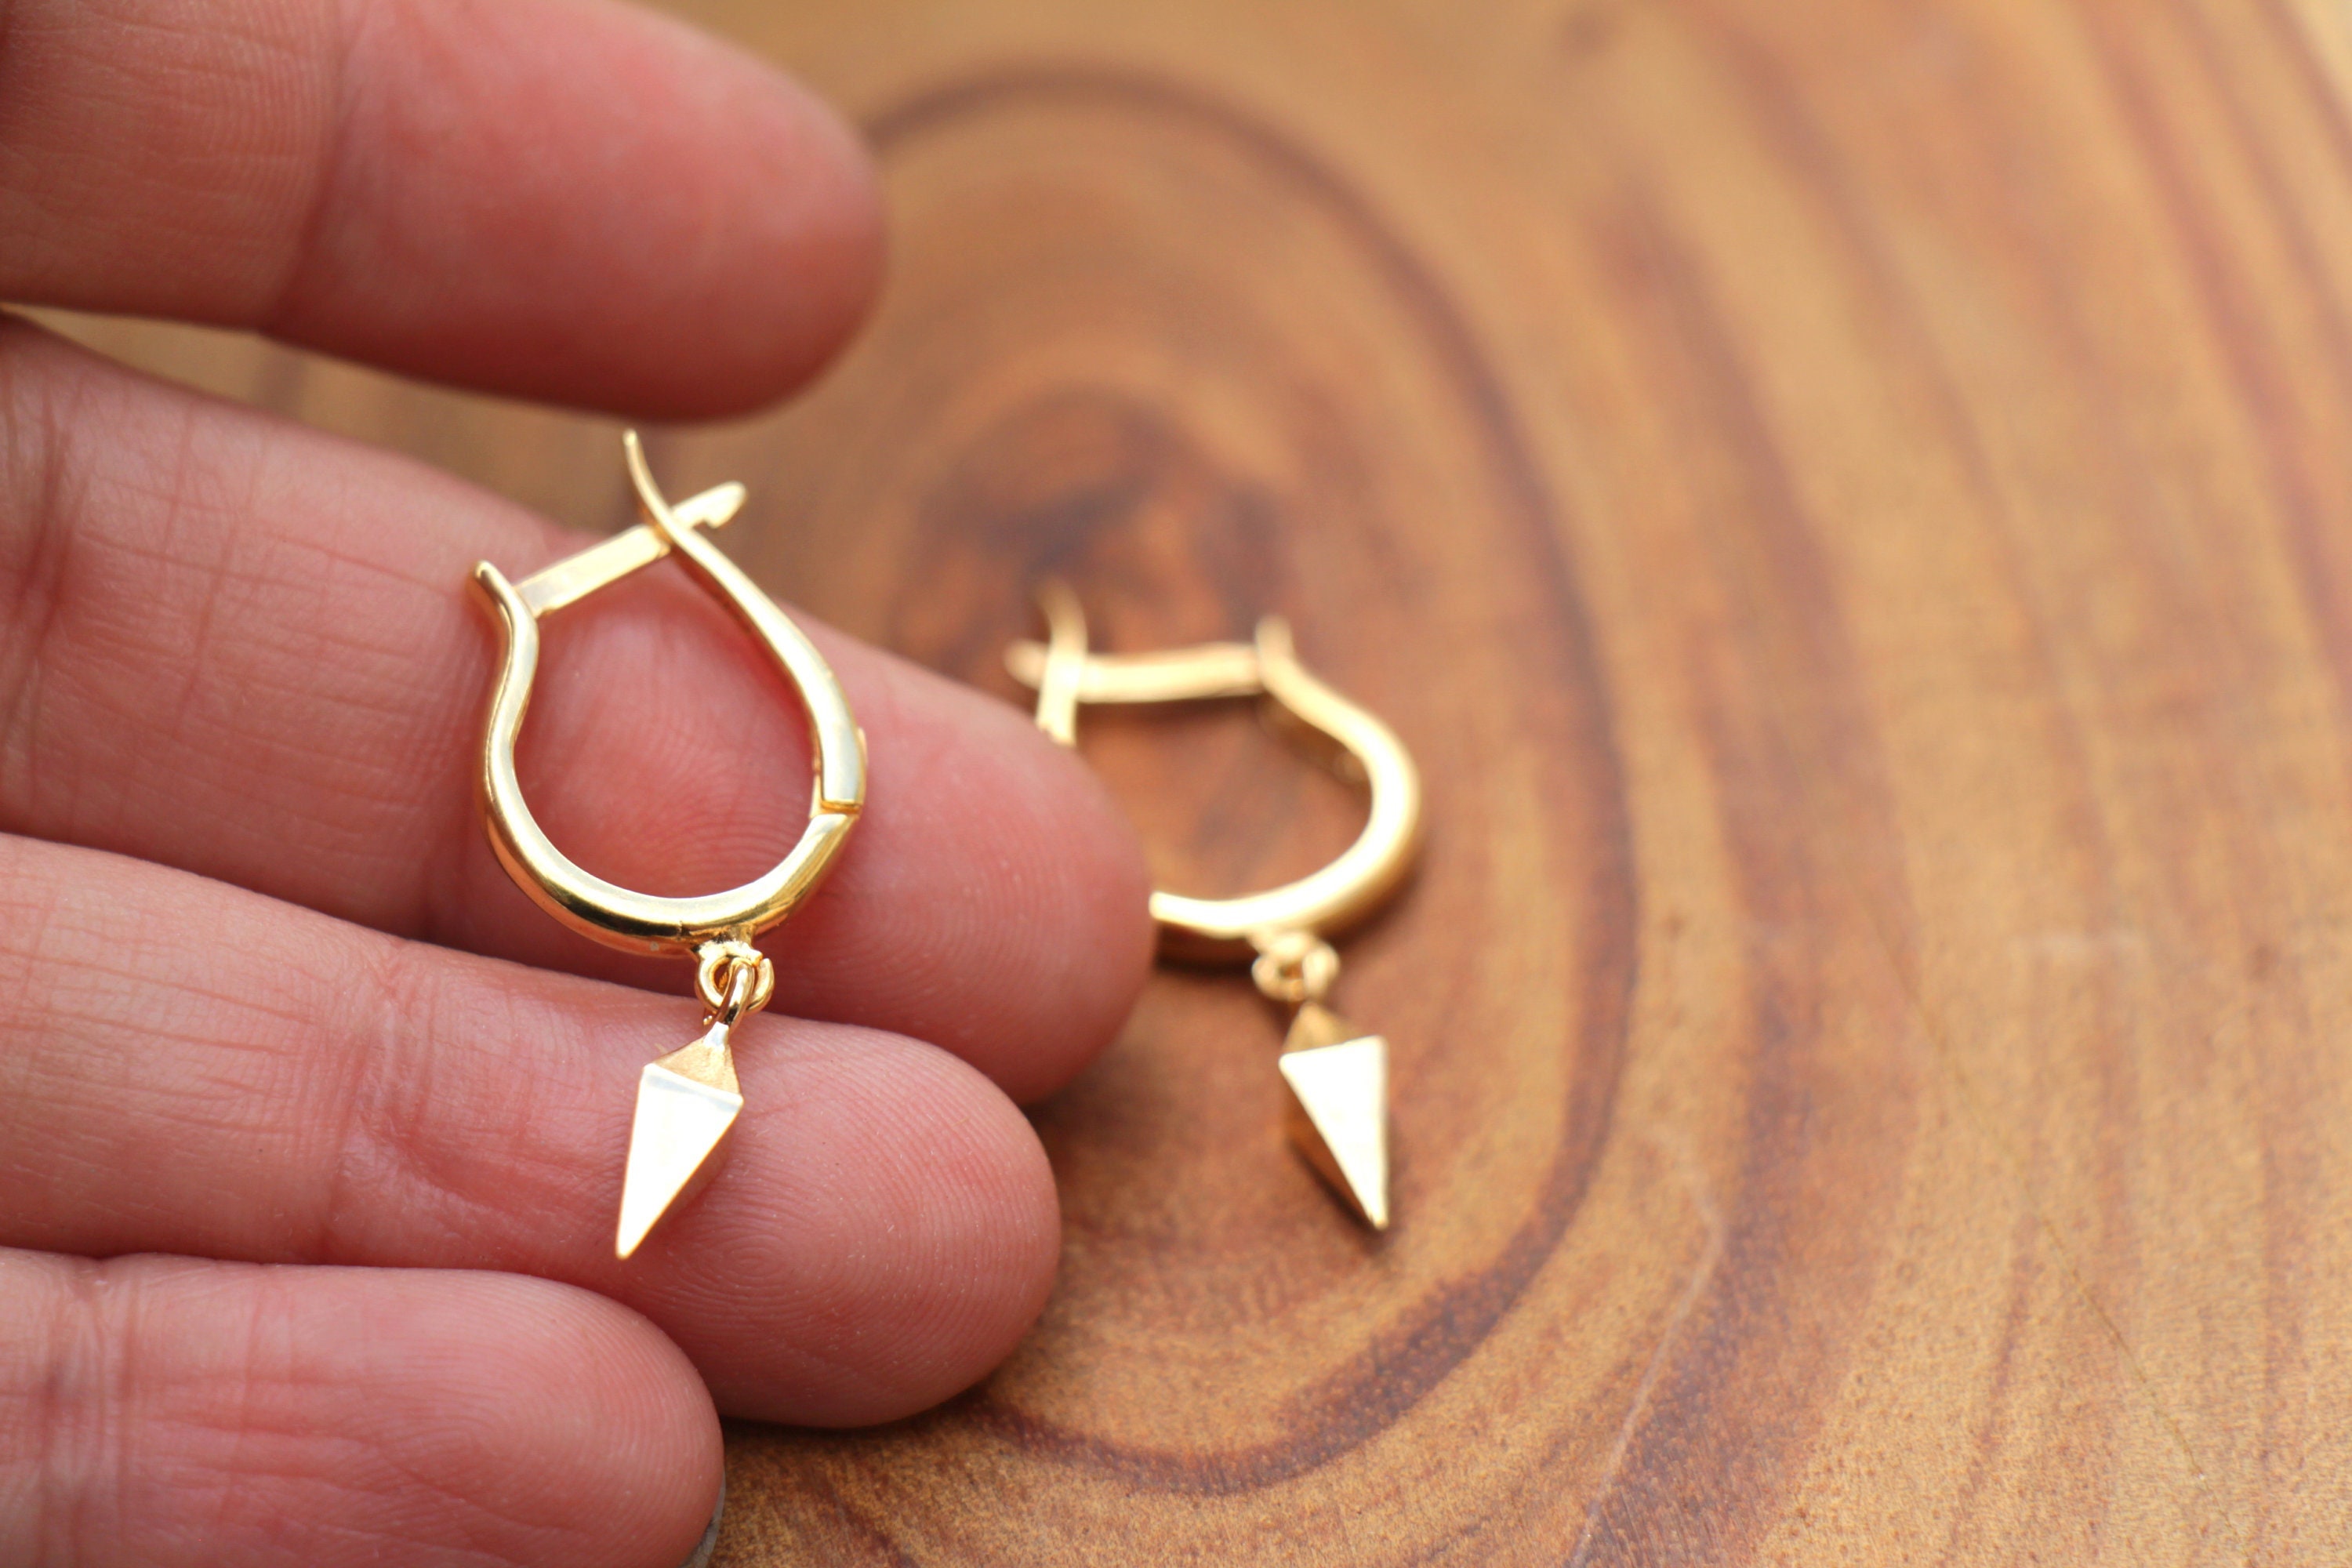 14k Yellow Gold Triangle Hoop Earrings Geometric Earrings Jewellery Earrings Hoop Earrings Small and Mid Size Hoop Earrings Triangular Hoop Earrings for Everyday Wear 